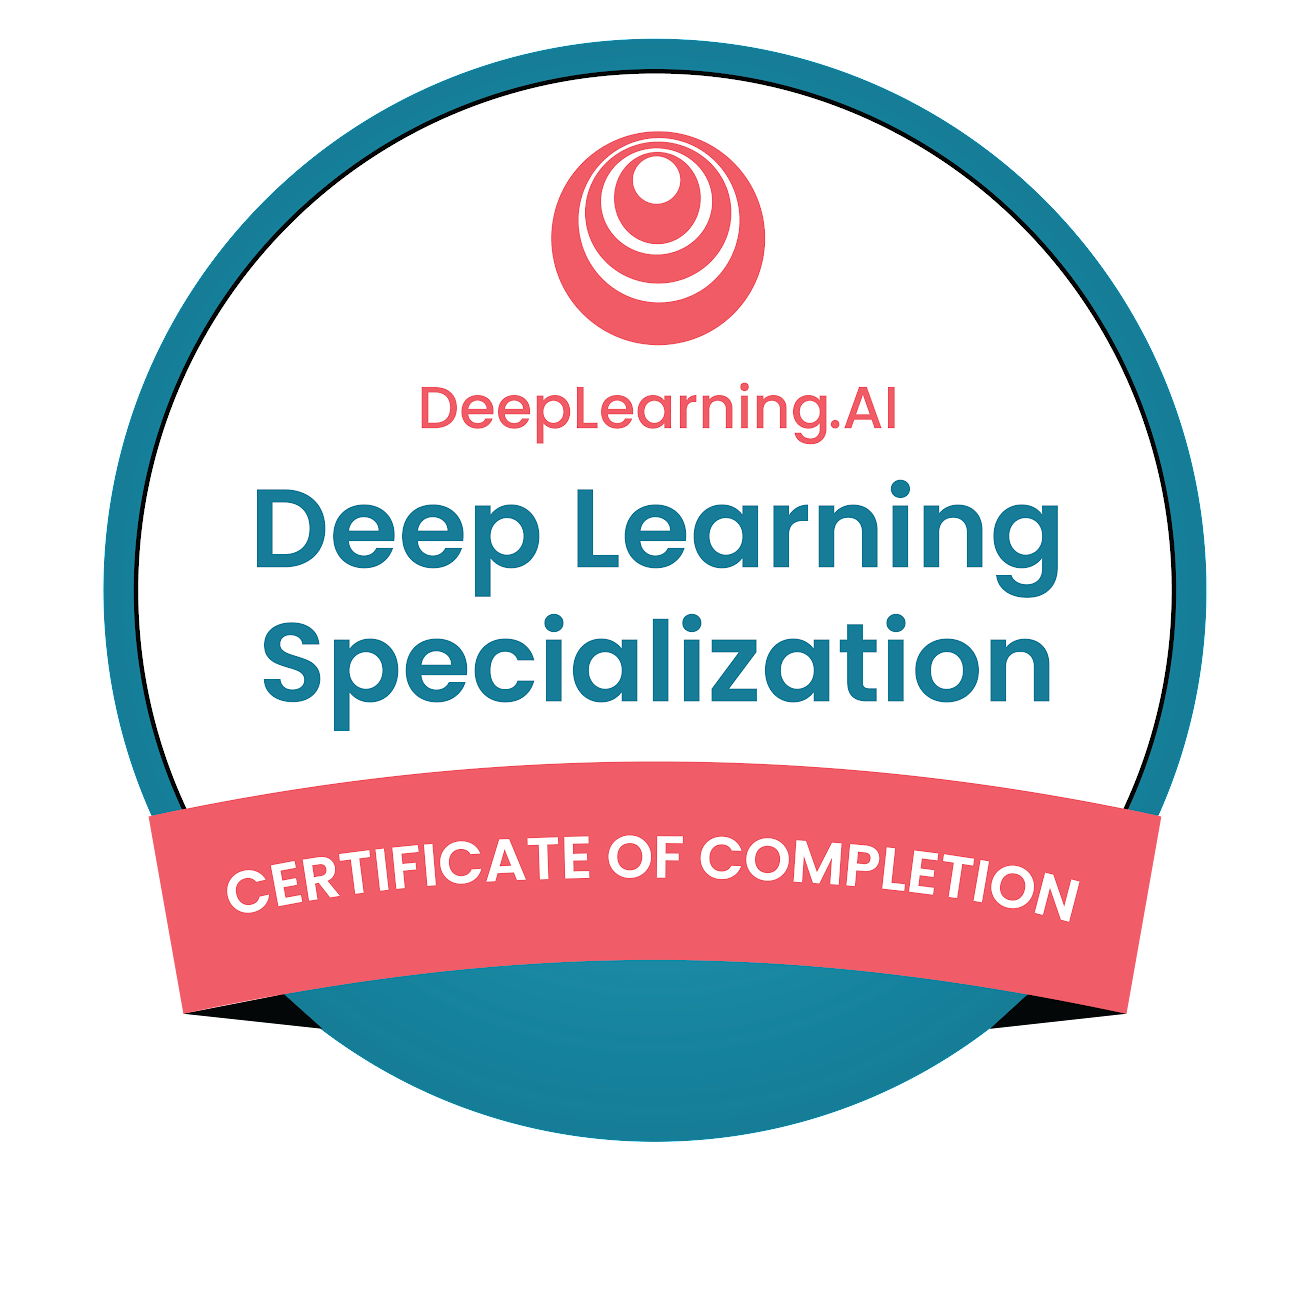 Deep Learning Specialization